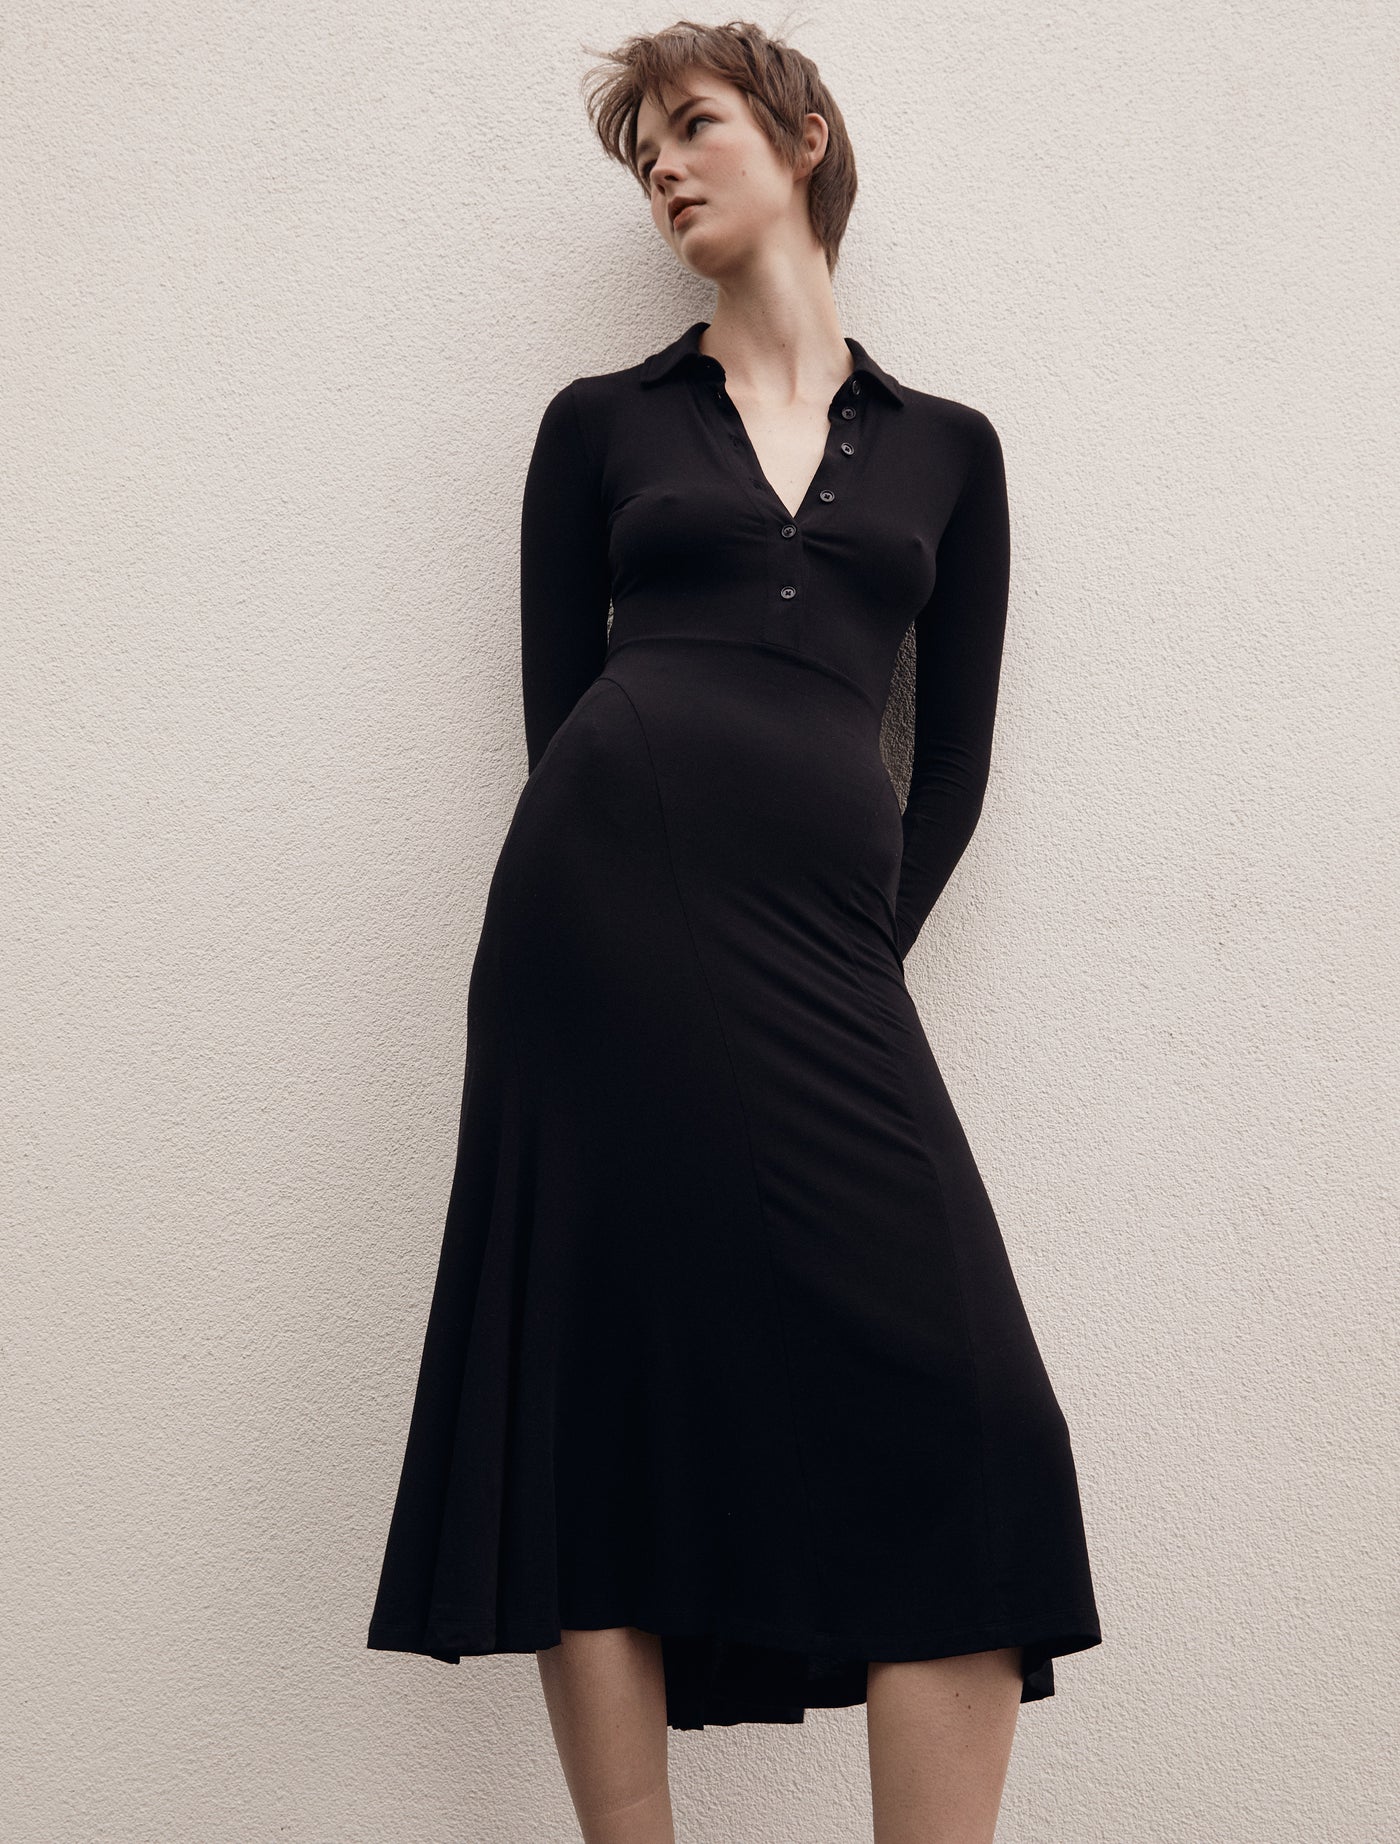 Melody Dress in Black